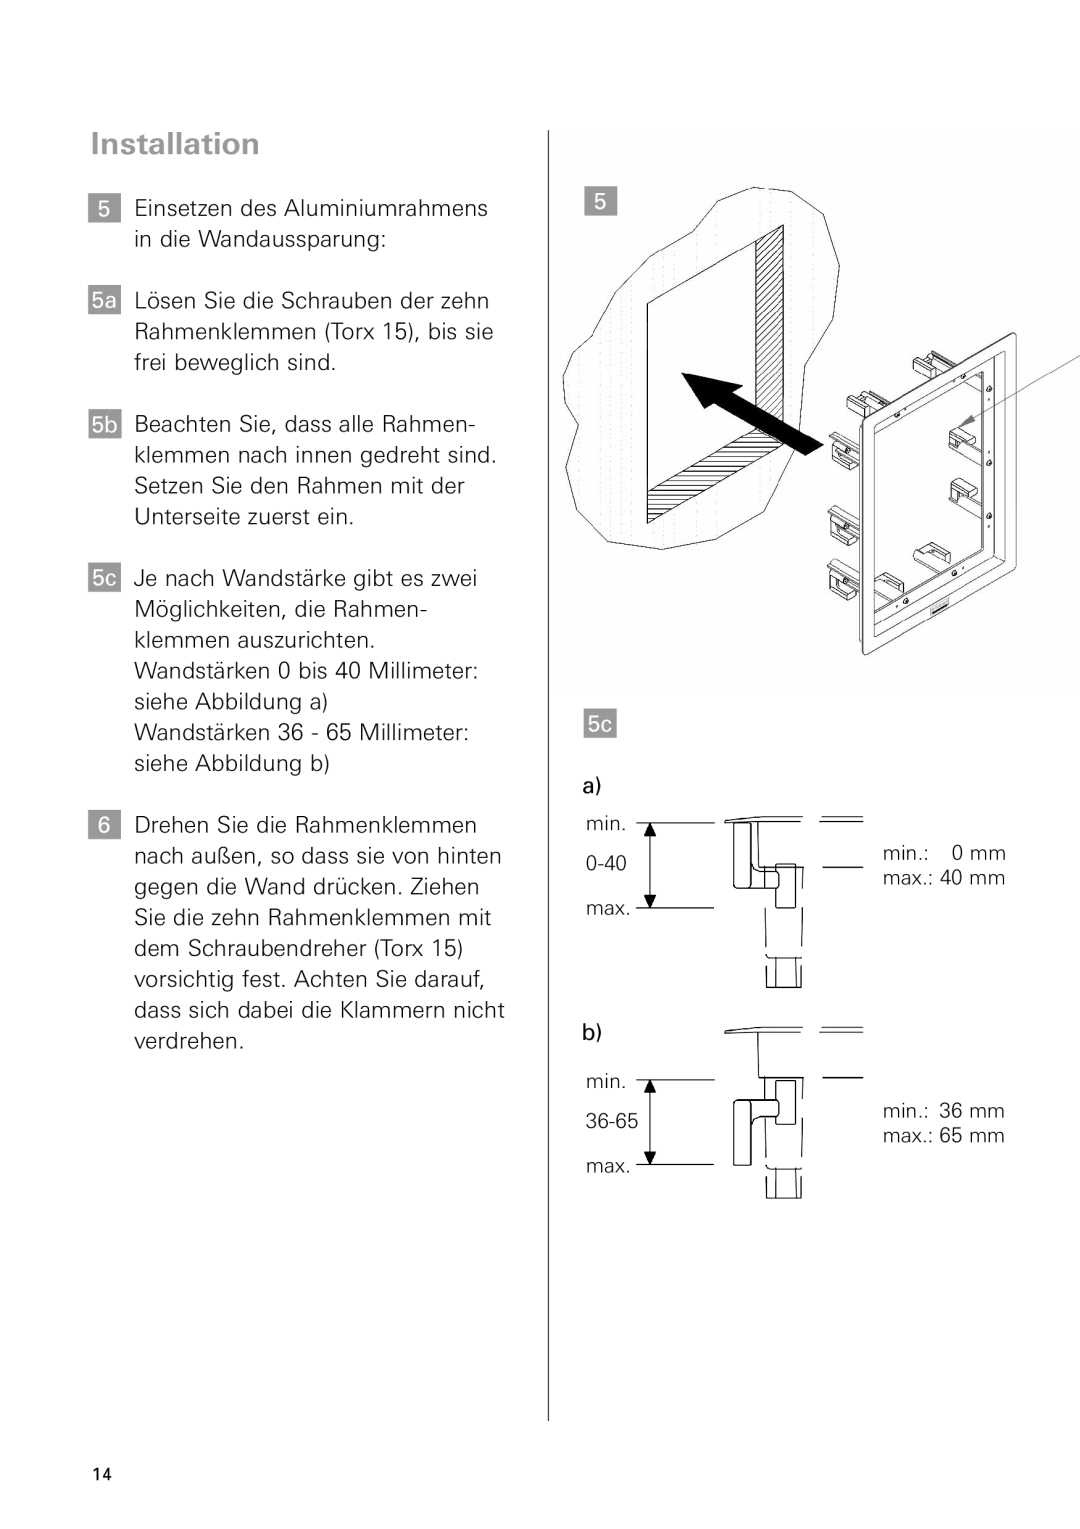 Dynaudio IP 24 instruction manual 5 5c, Installation, Wandstärken 36 - 65 Millimeter siehe Abbildung b 